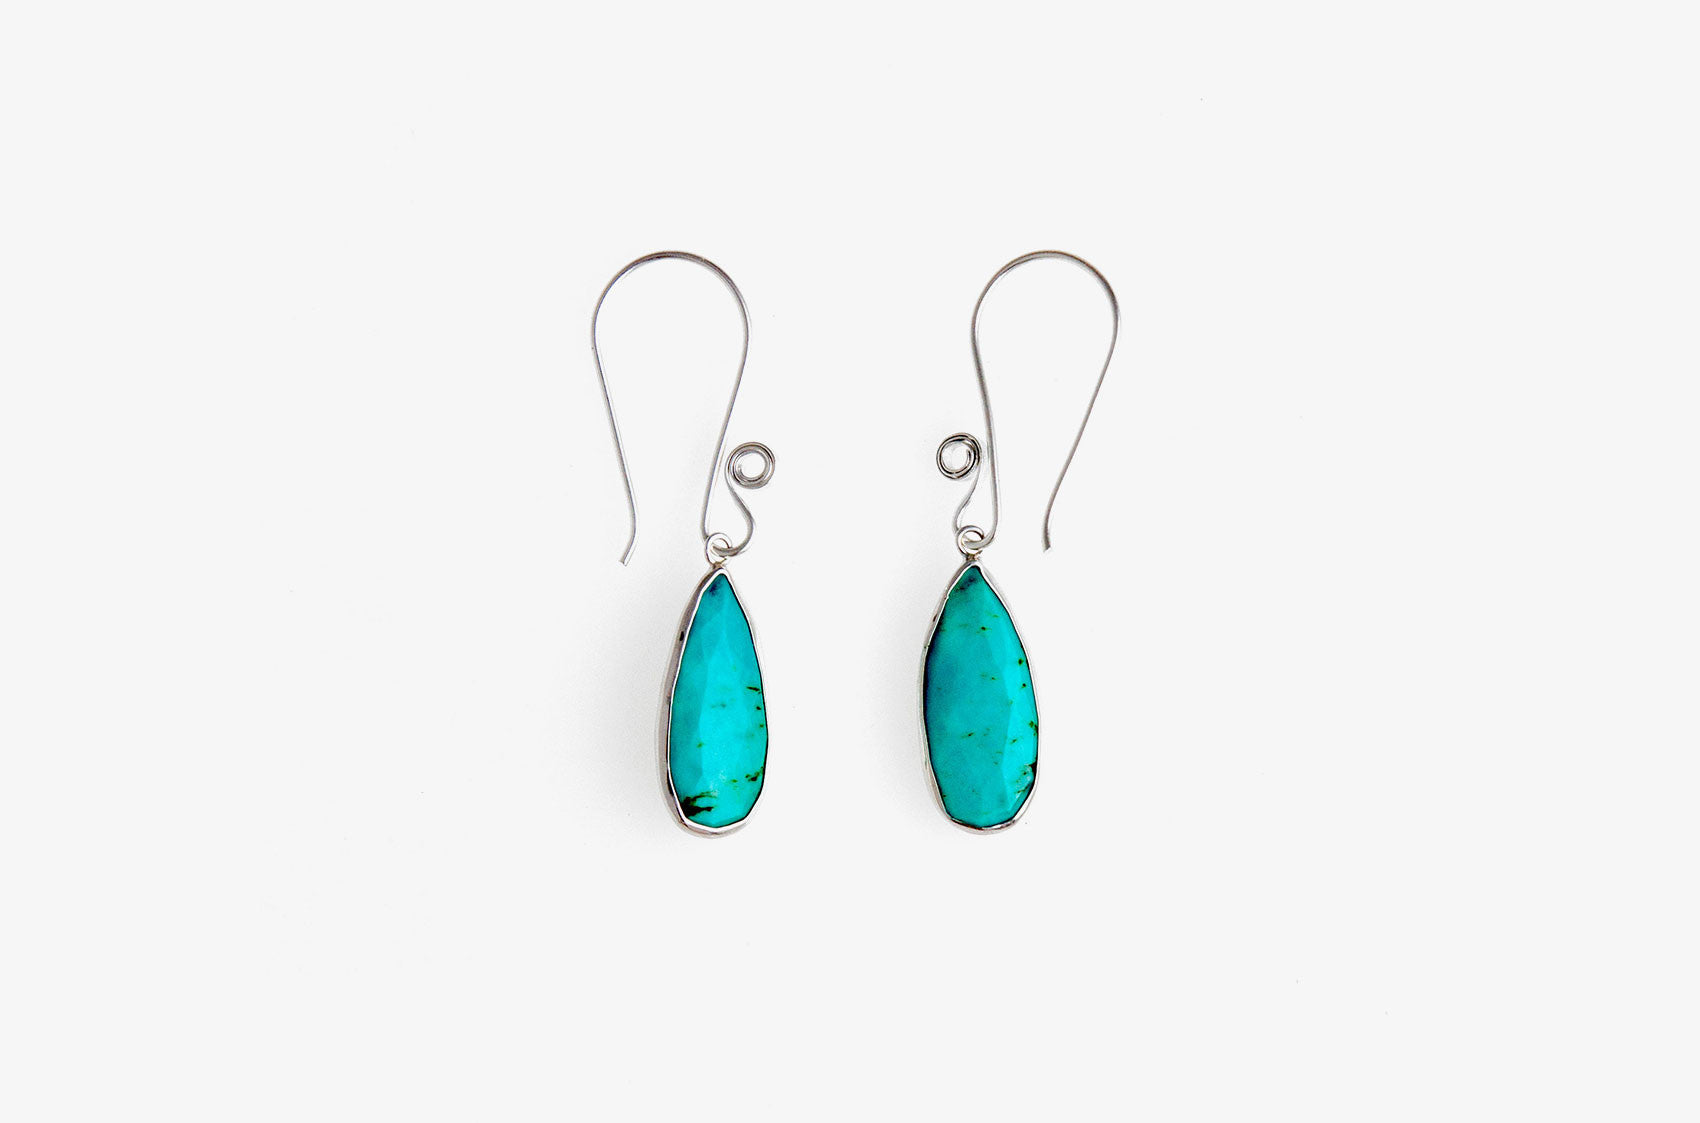 Silver & Stone. Turquoise drop earrings